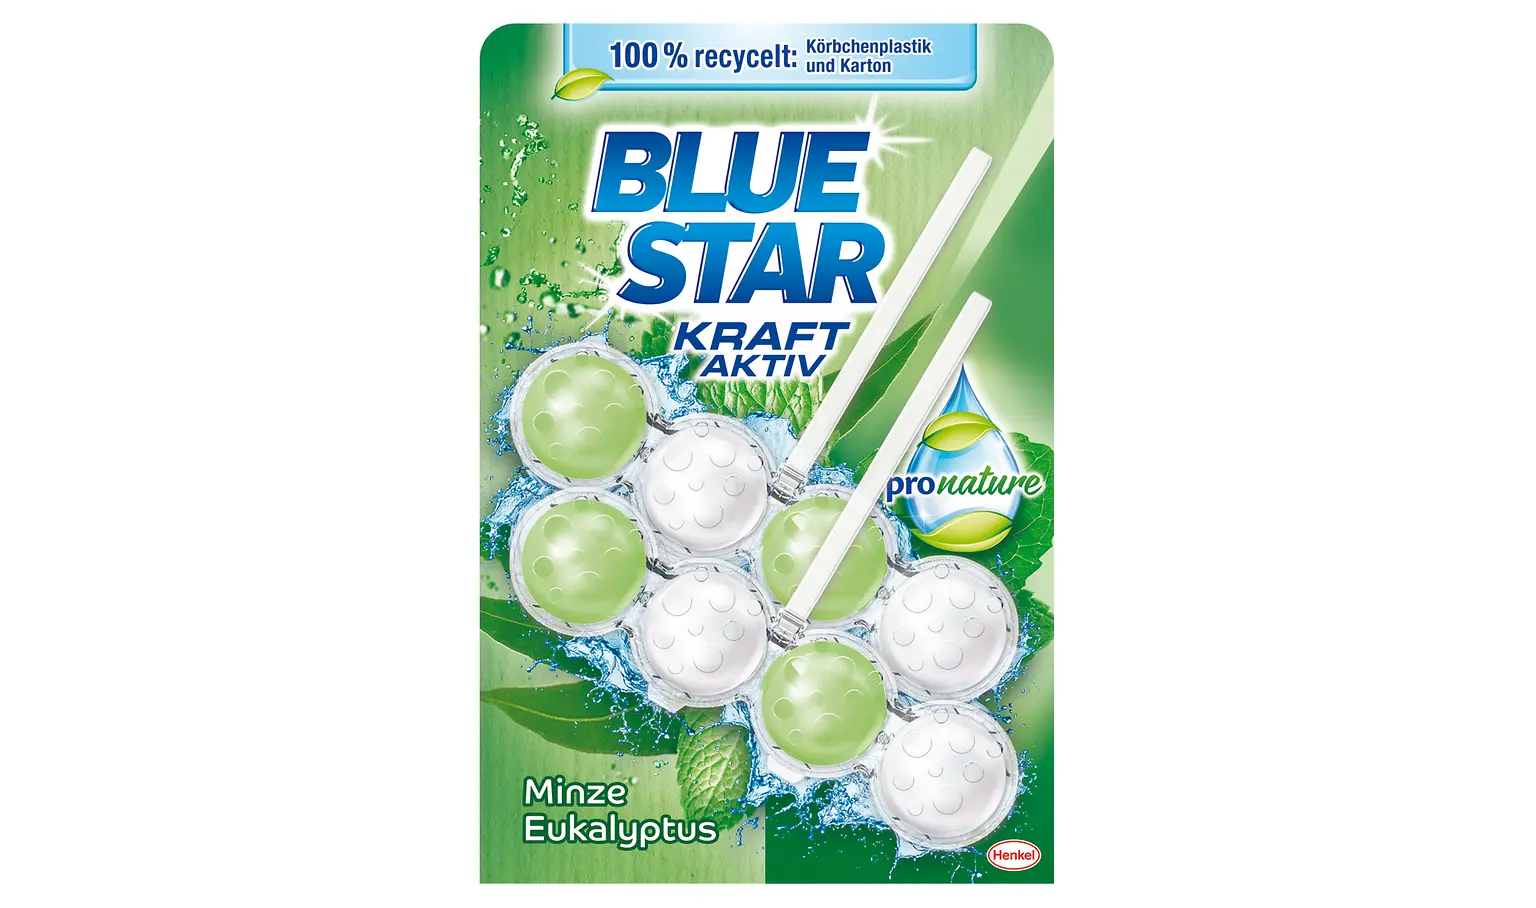 Blue Star Kraft-Aktiv Pro Nature Minze Eukalyptus